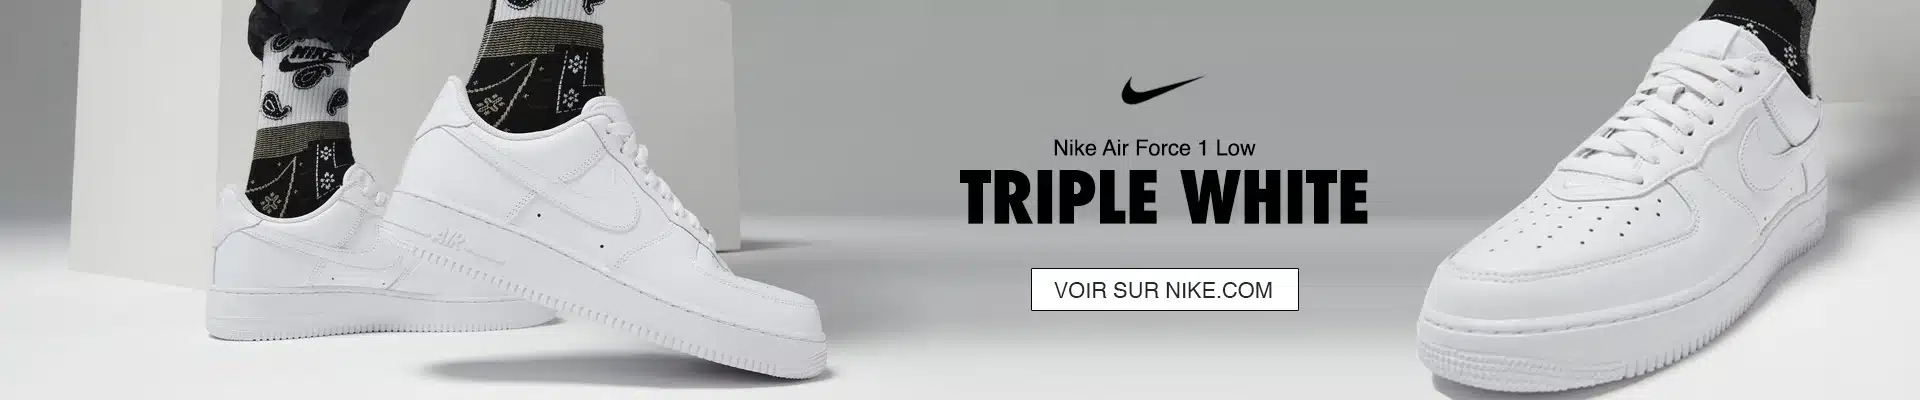 nike shoes Air Force Triple White